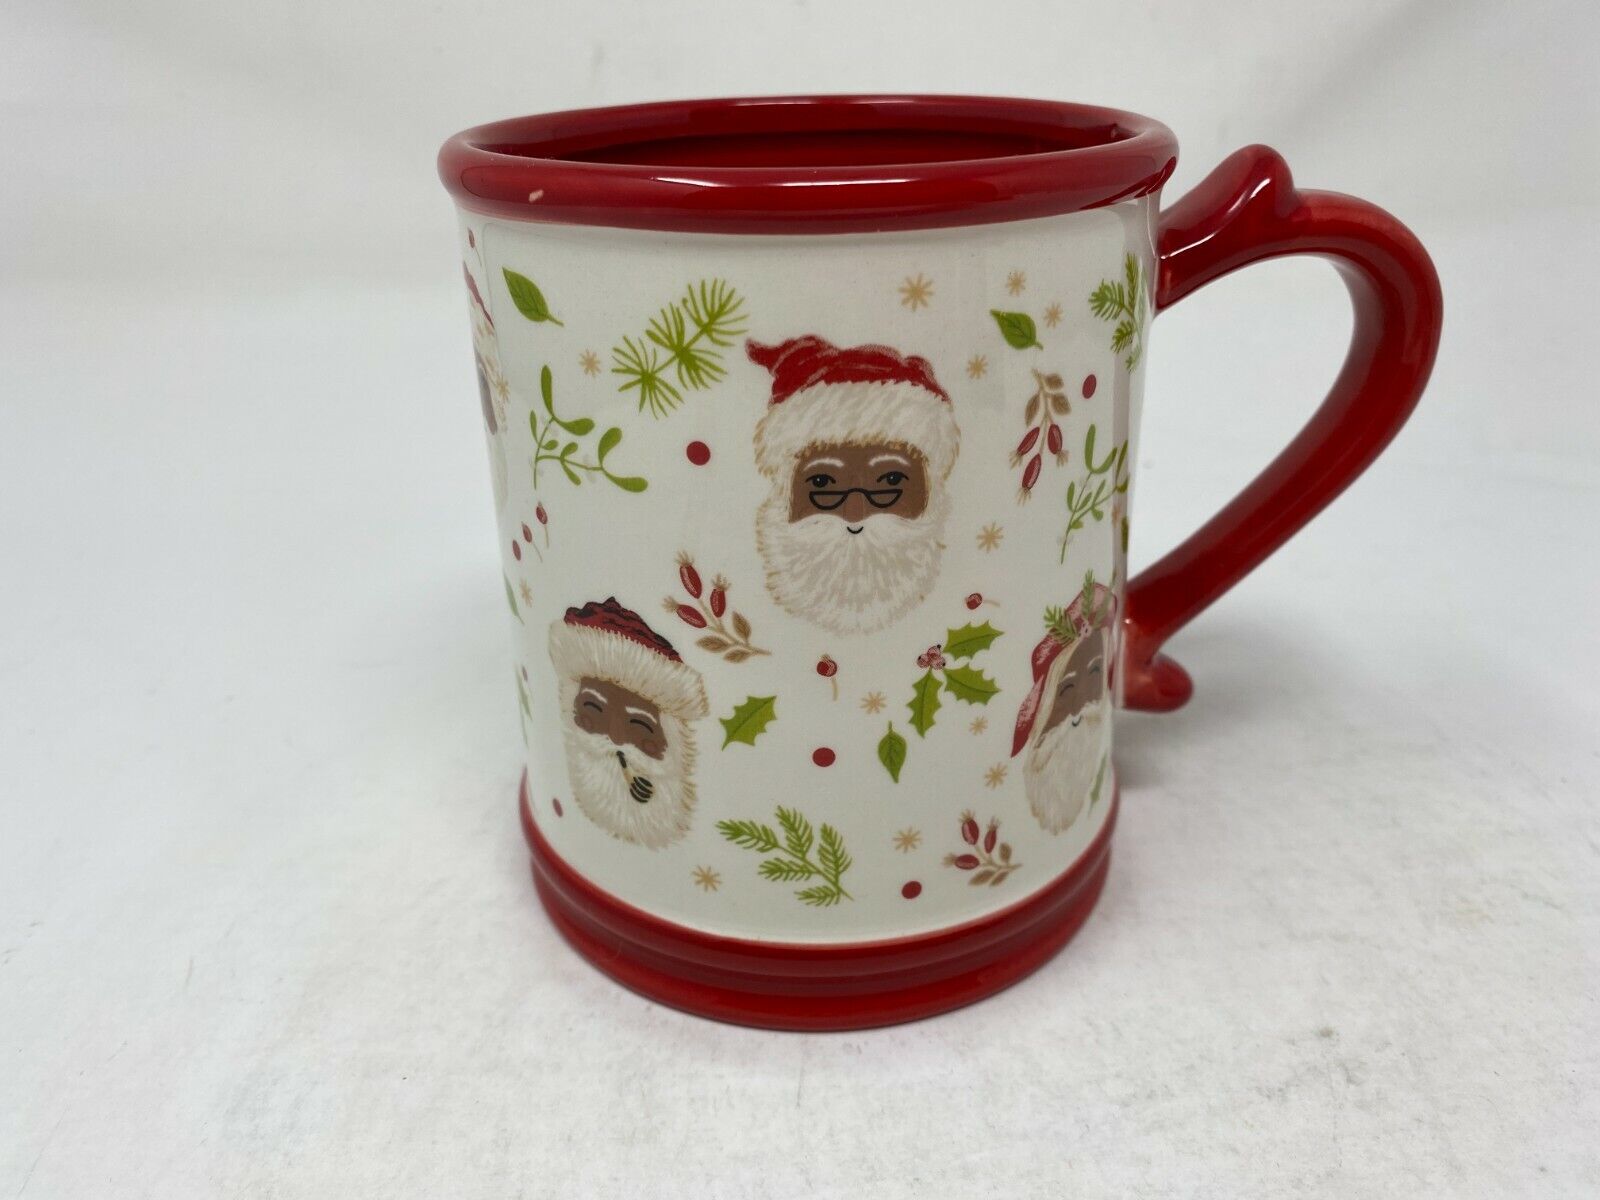 Tag Ceramic Santa and Holly Coffee Mug BB01B05004